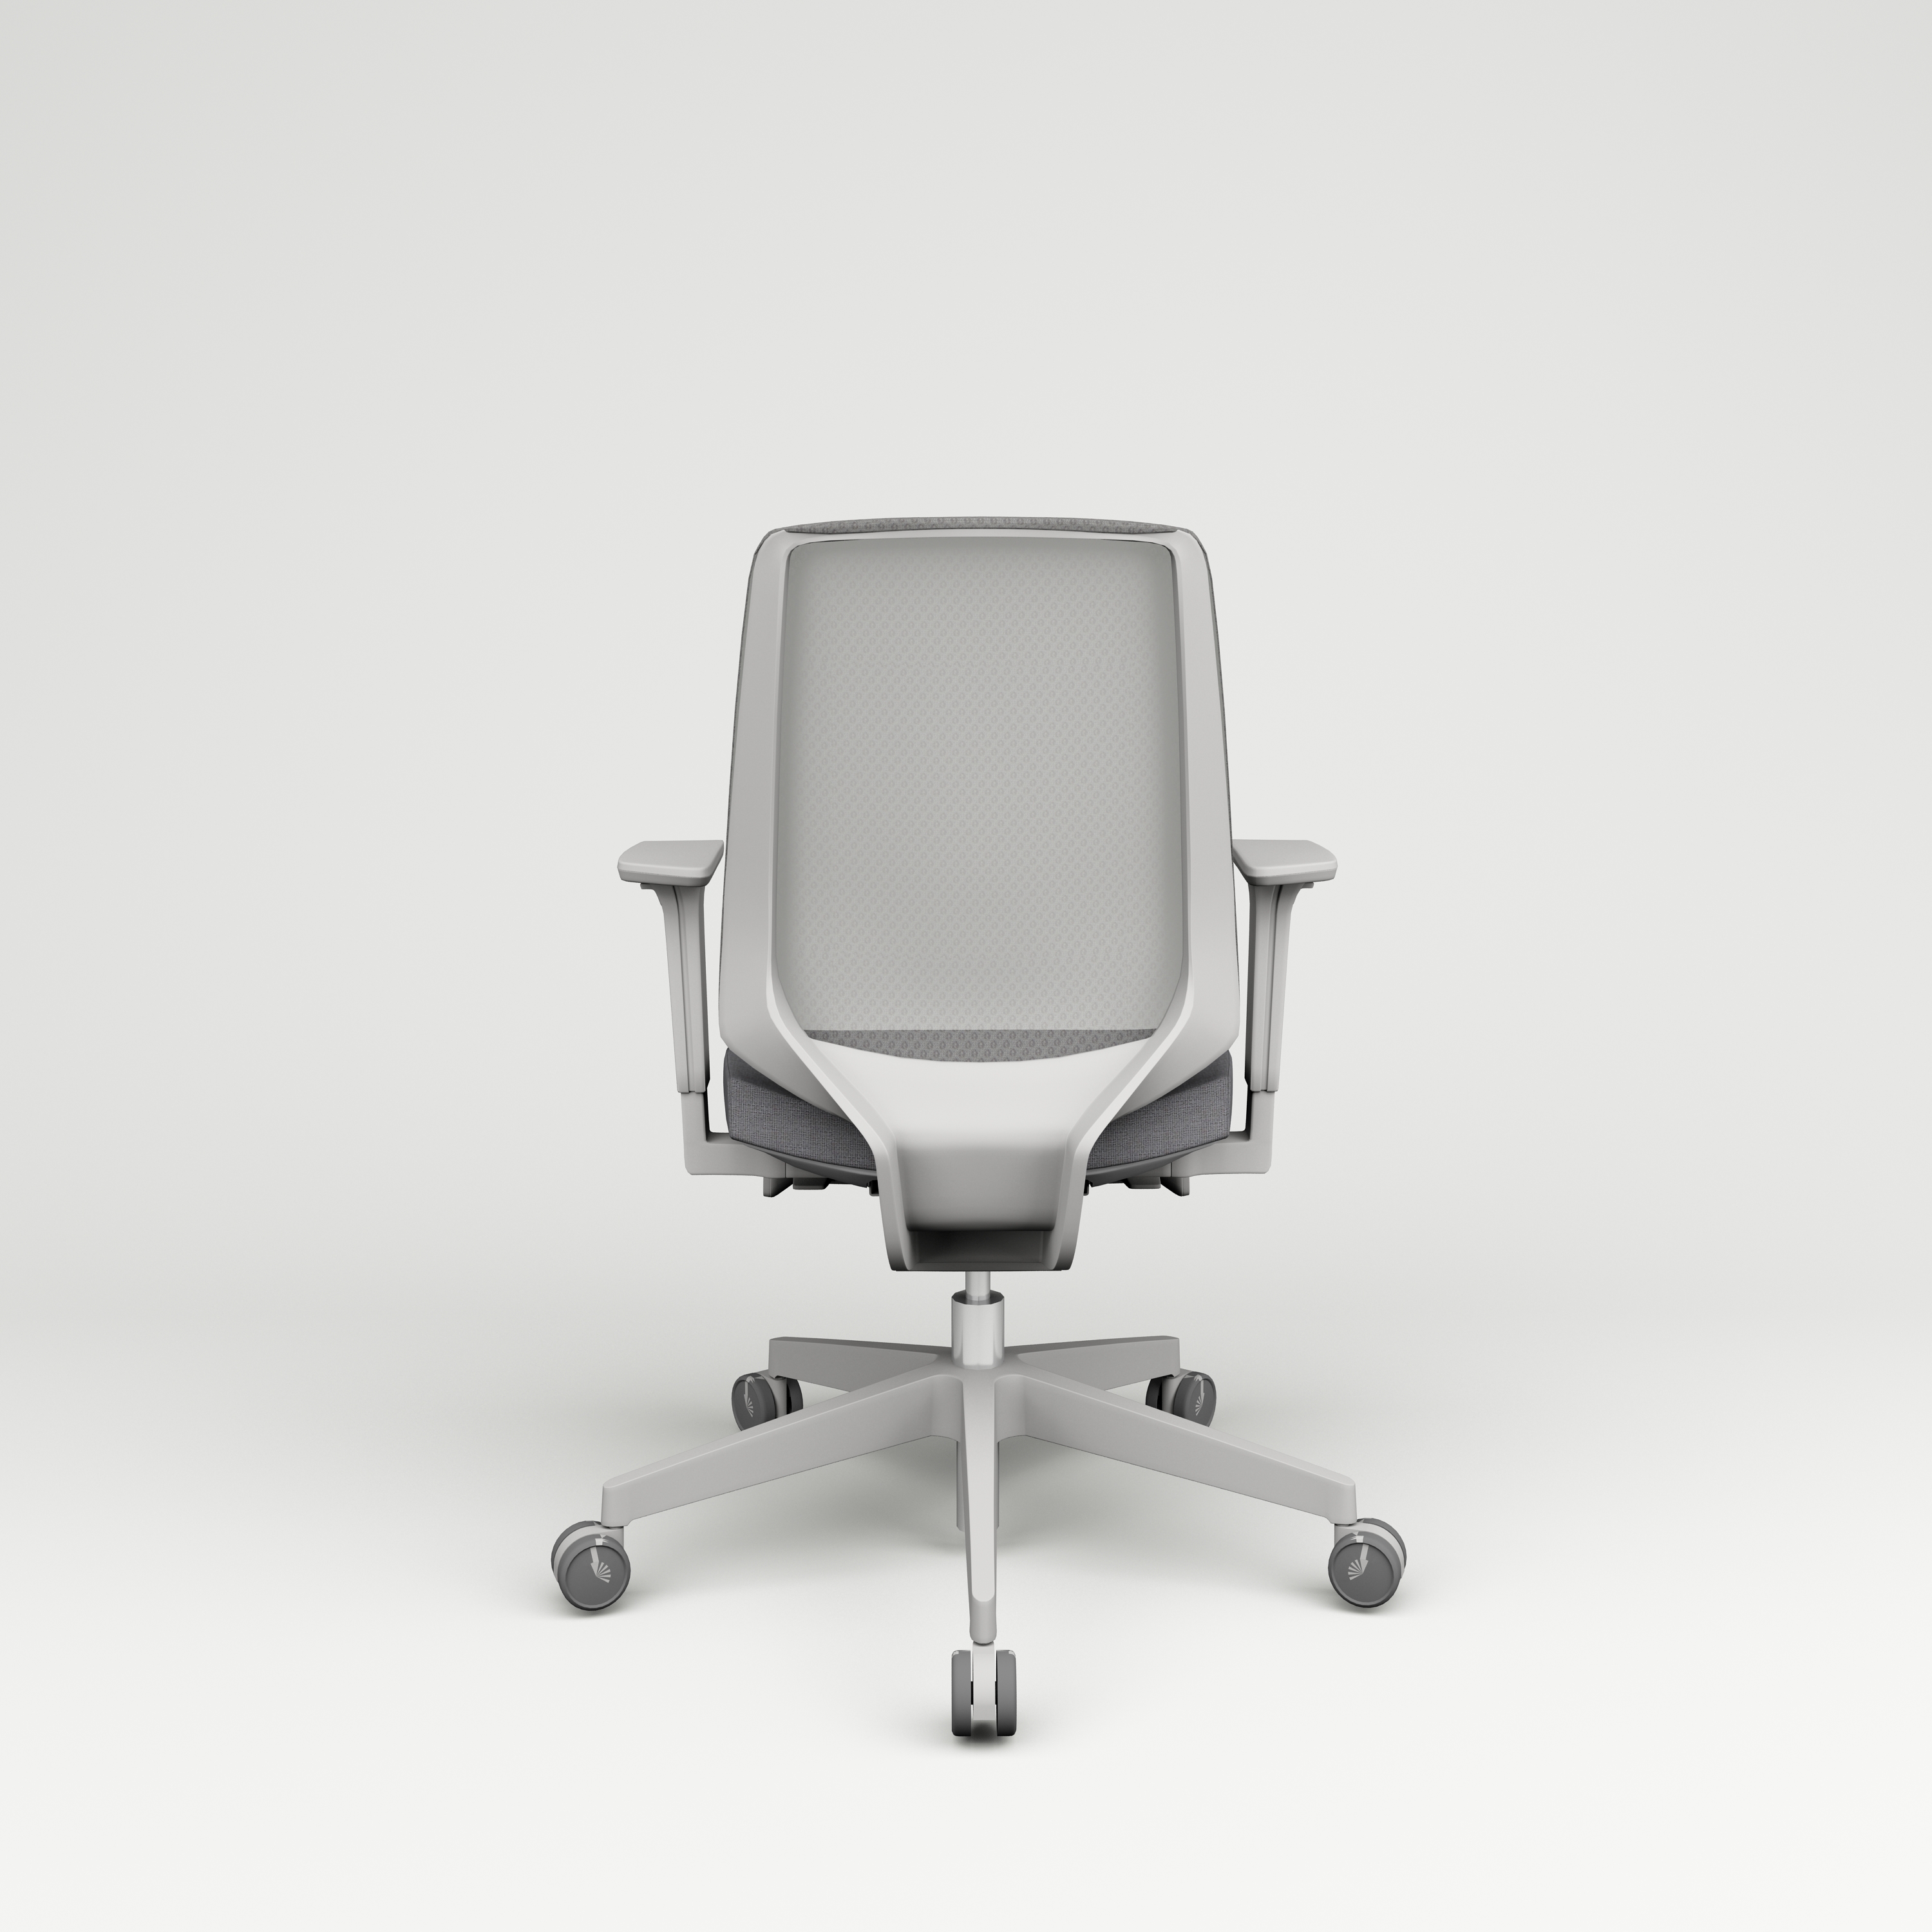 Office chair Light Up, gray mesh back, armrests